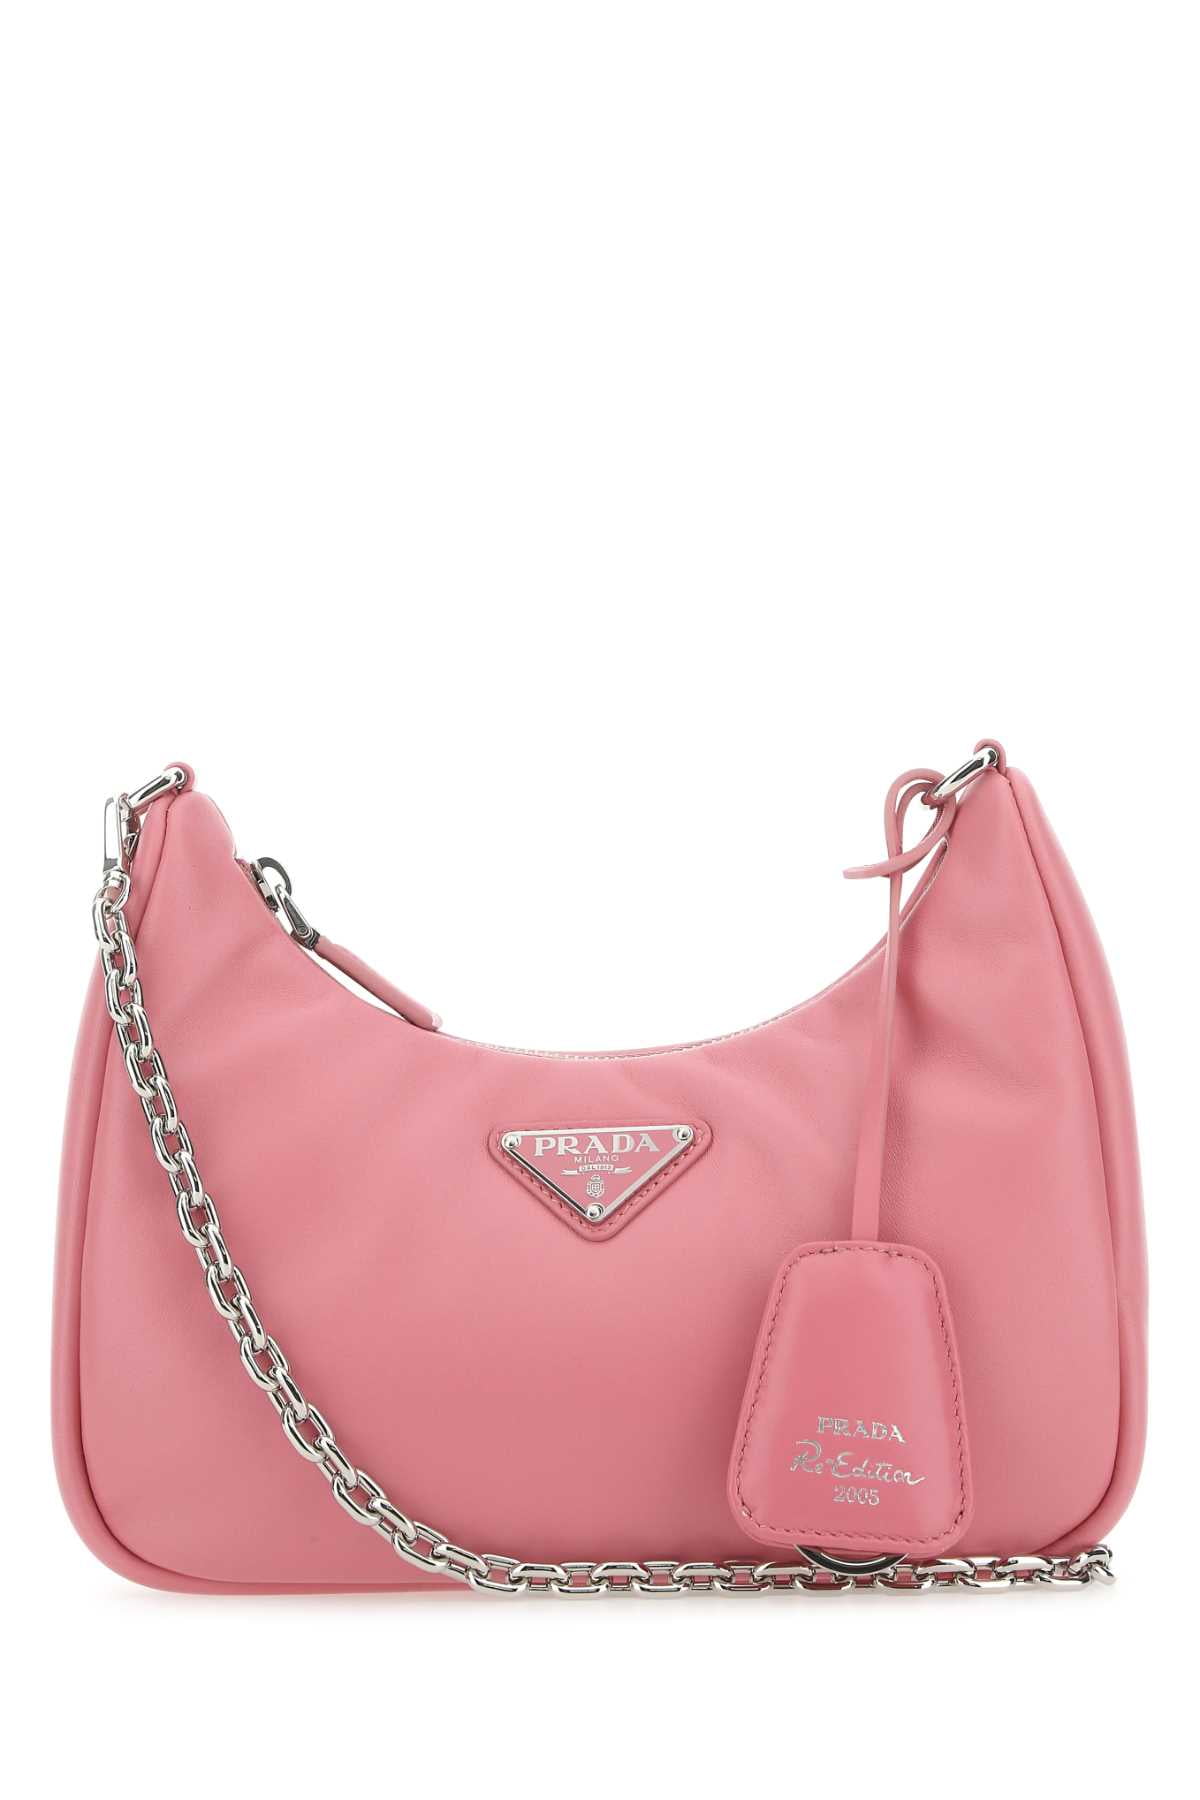 PRADA Handbags 👜💕 7 pcs combo set... - The.Fashion.Store | Facebook